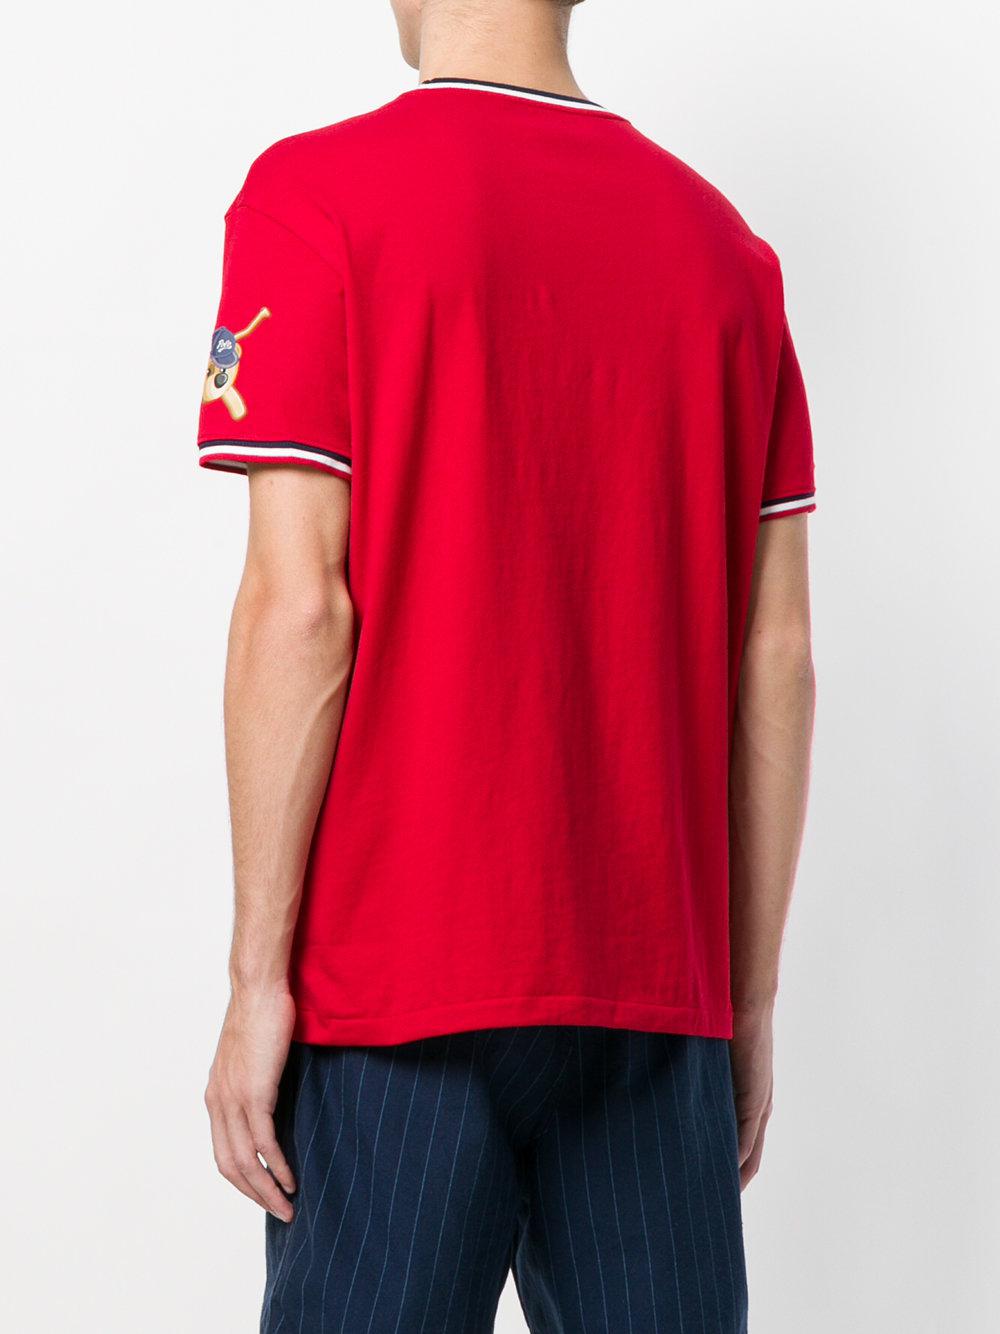 Polo Ralph Lauren Vintage Logo T-shirt in Red for Men - Lyst